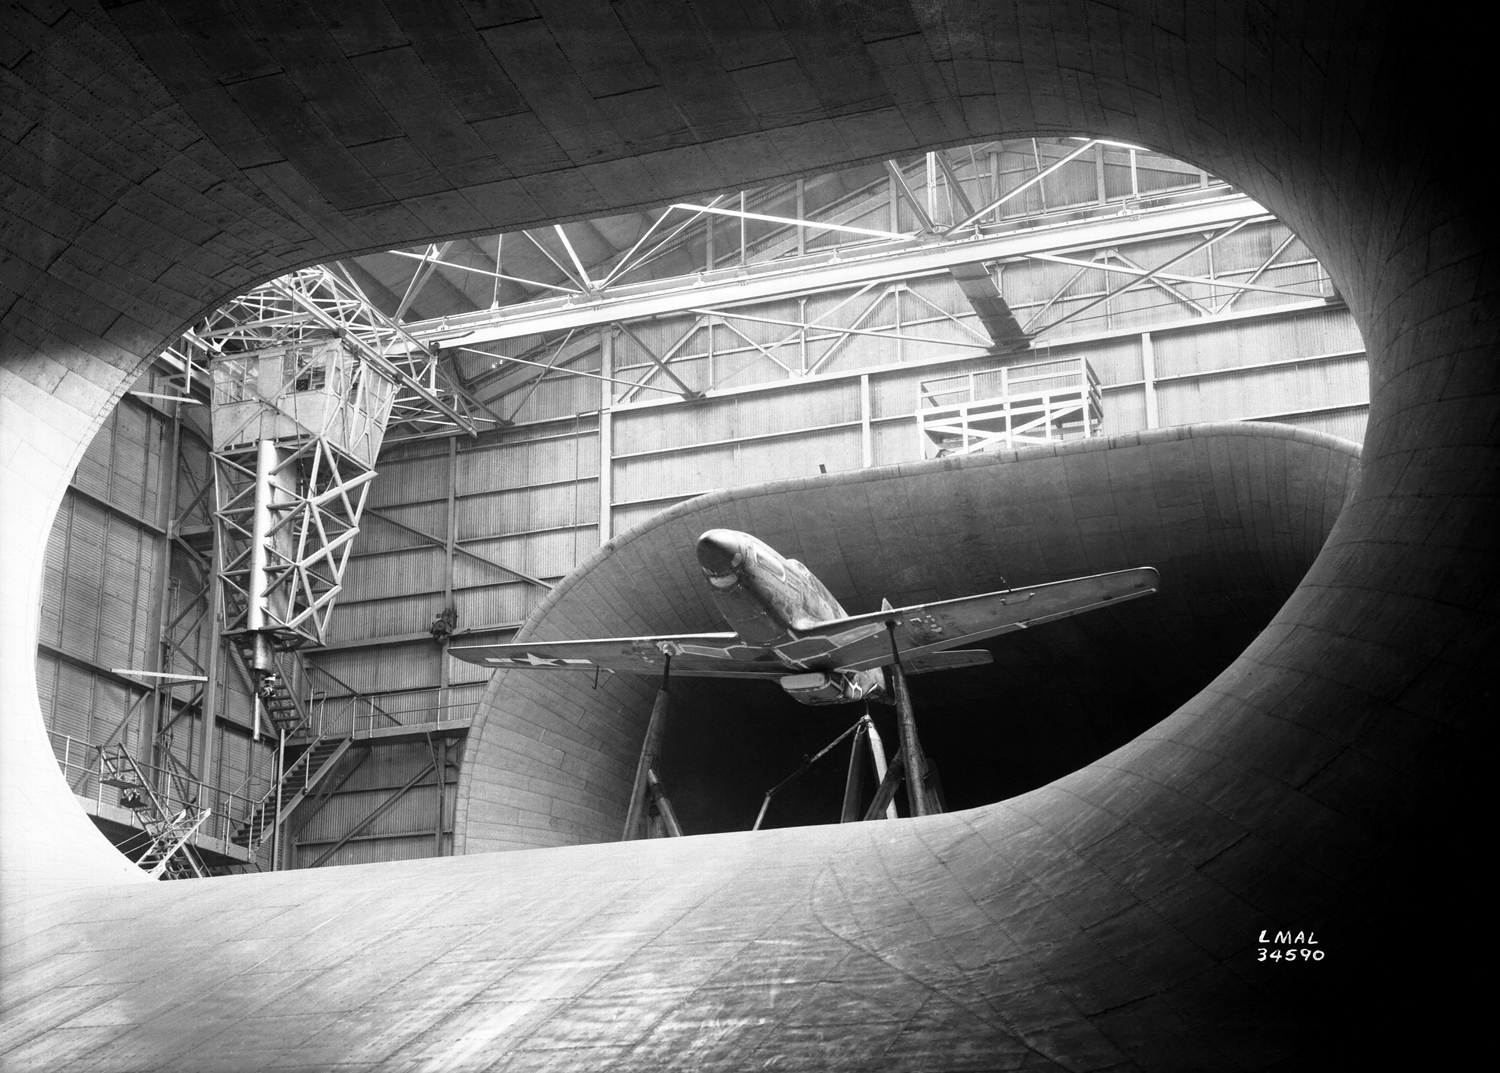 North American P-51B Mustang in teh full-scale NACA wind tunnel, Langley, Virginia, 23 September 1945. (NASA)